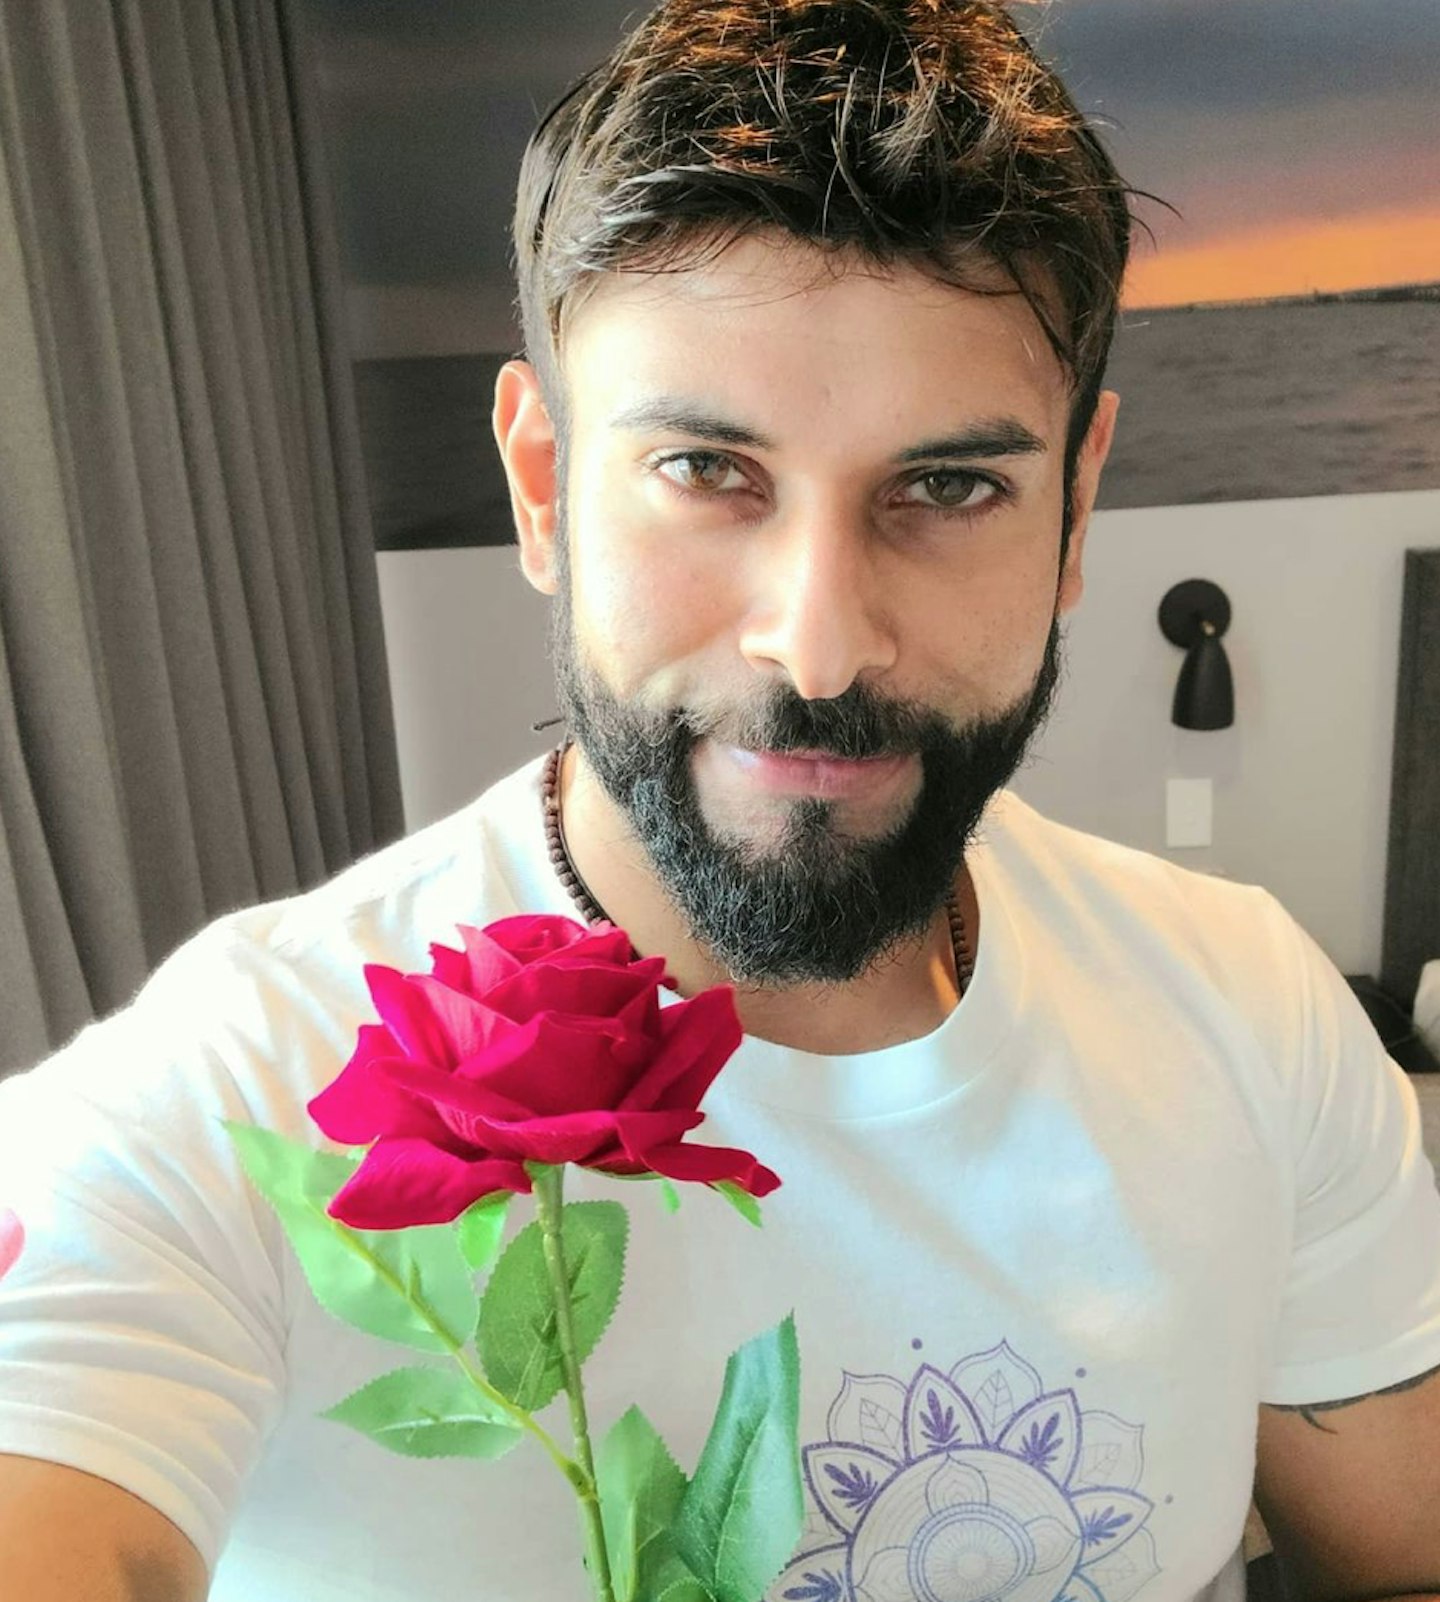 Dino Hira uploads post to instagram holding rose in hand